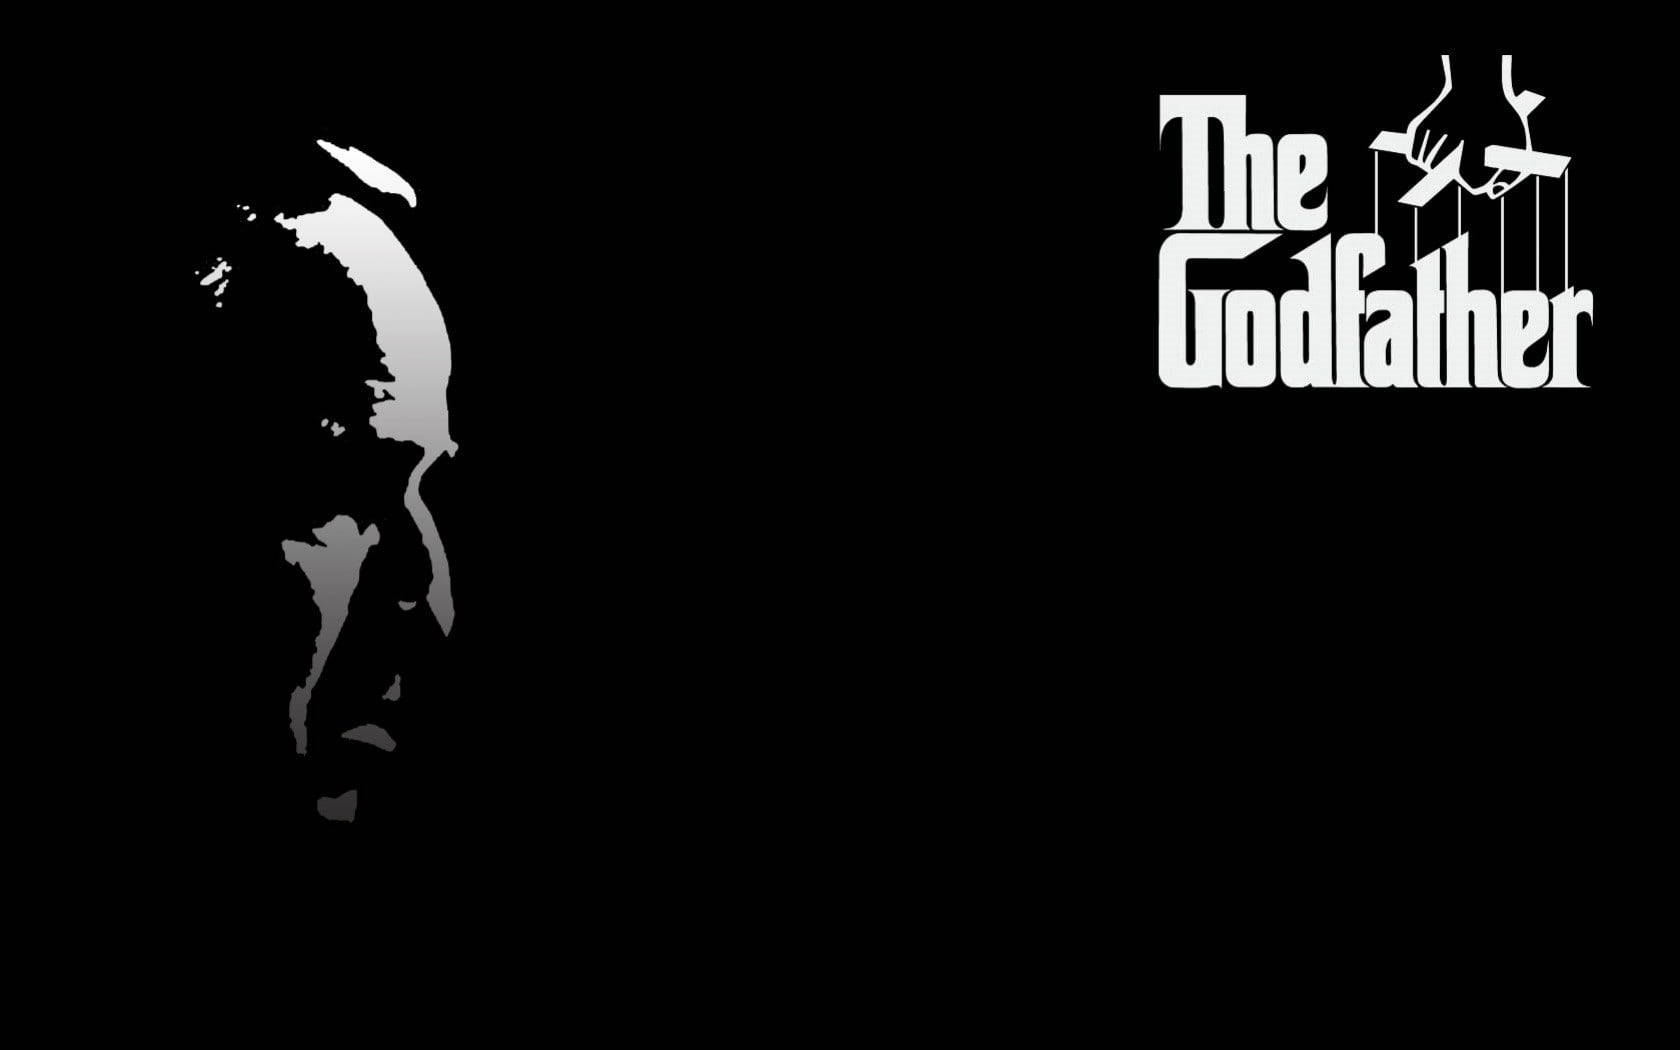 Mafia Film The Godfather Poster Background